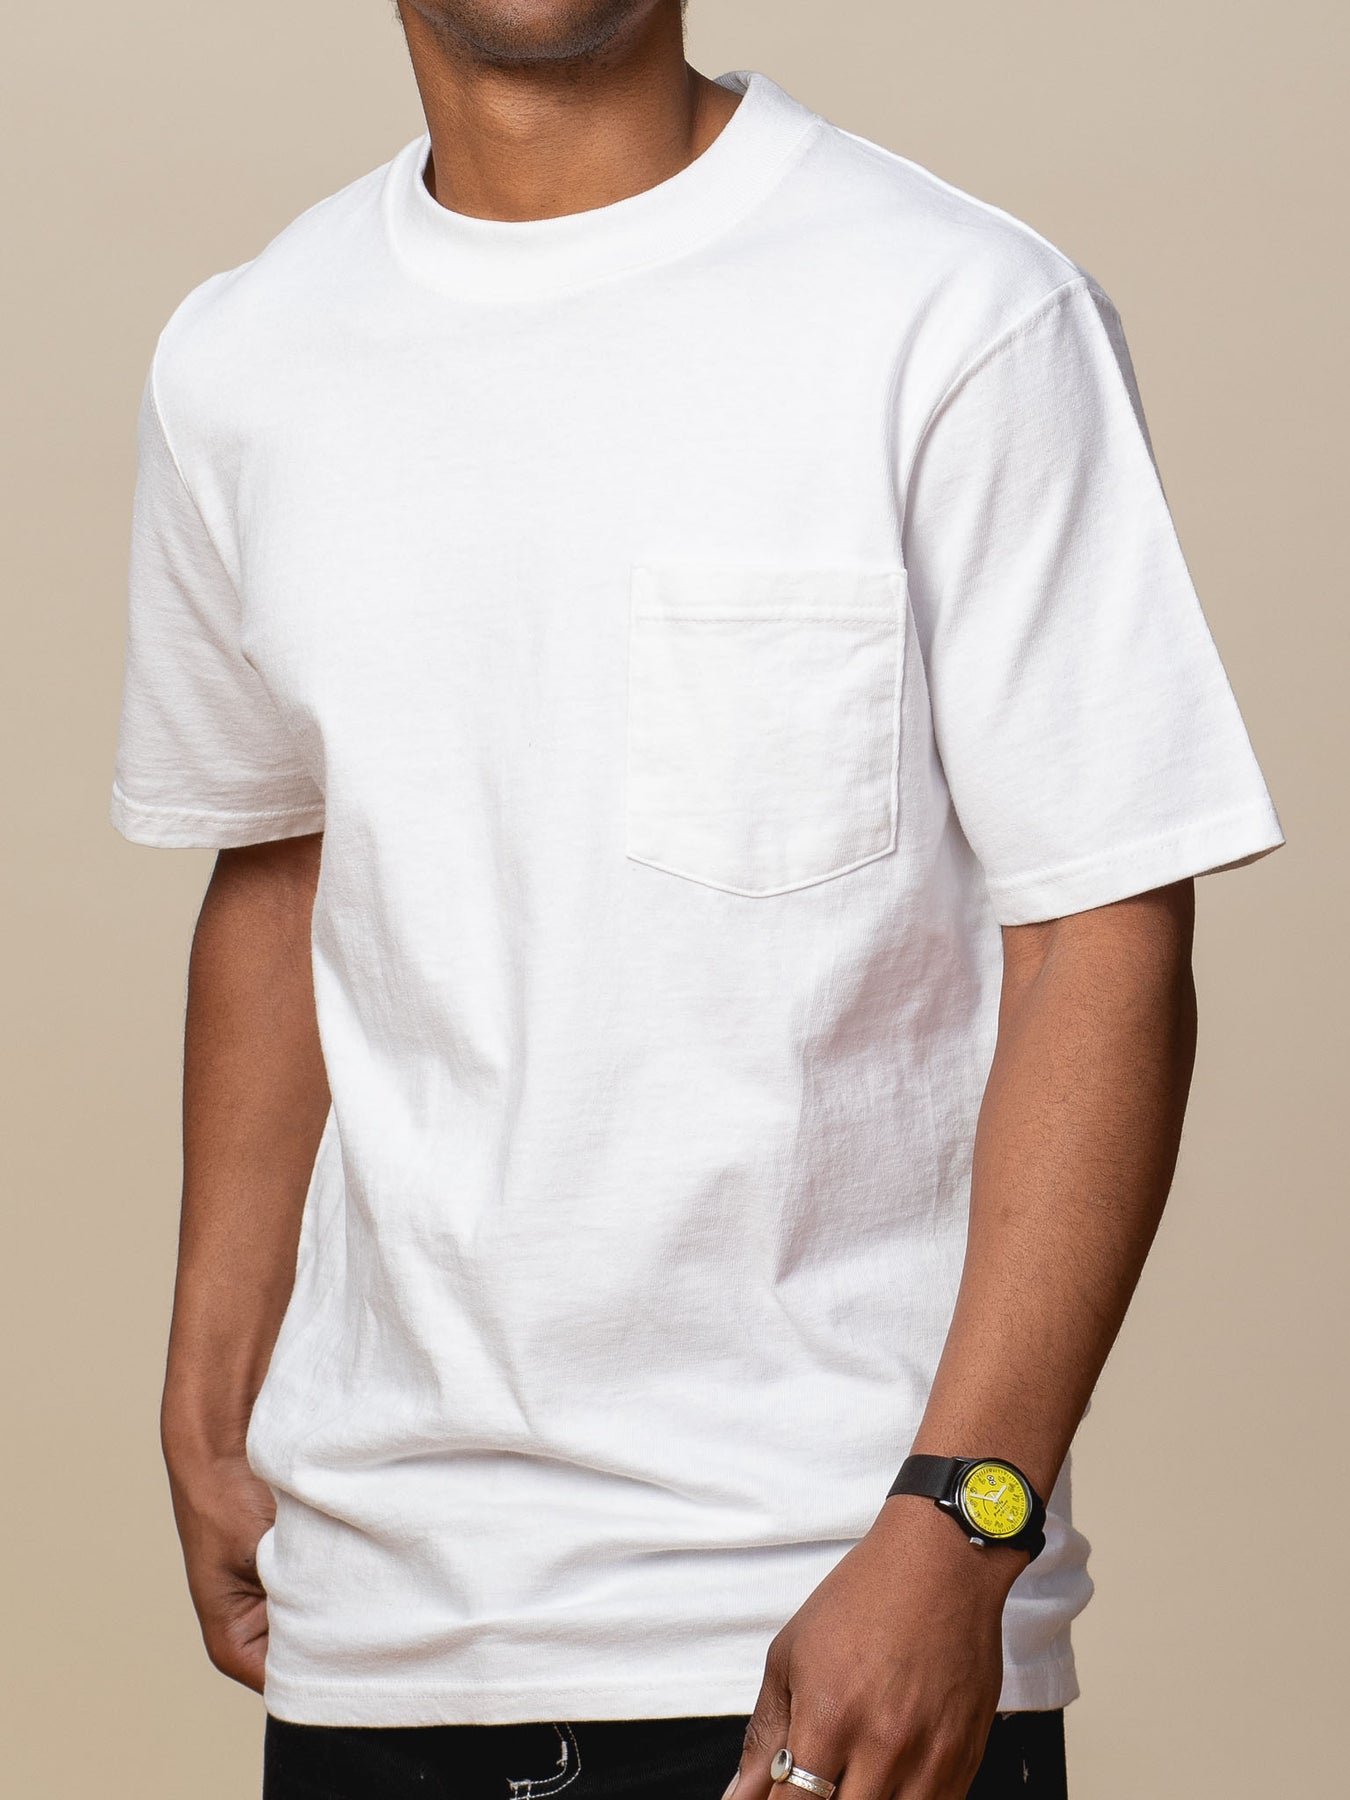 Goodwear Adult Pocket T Shirt Heavyweight Cotton Made in USA 